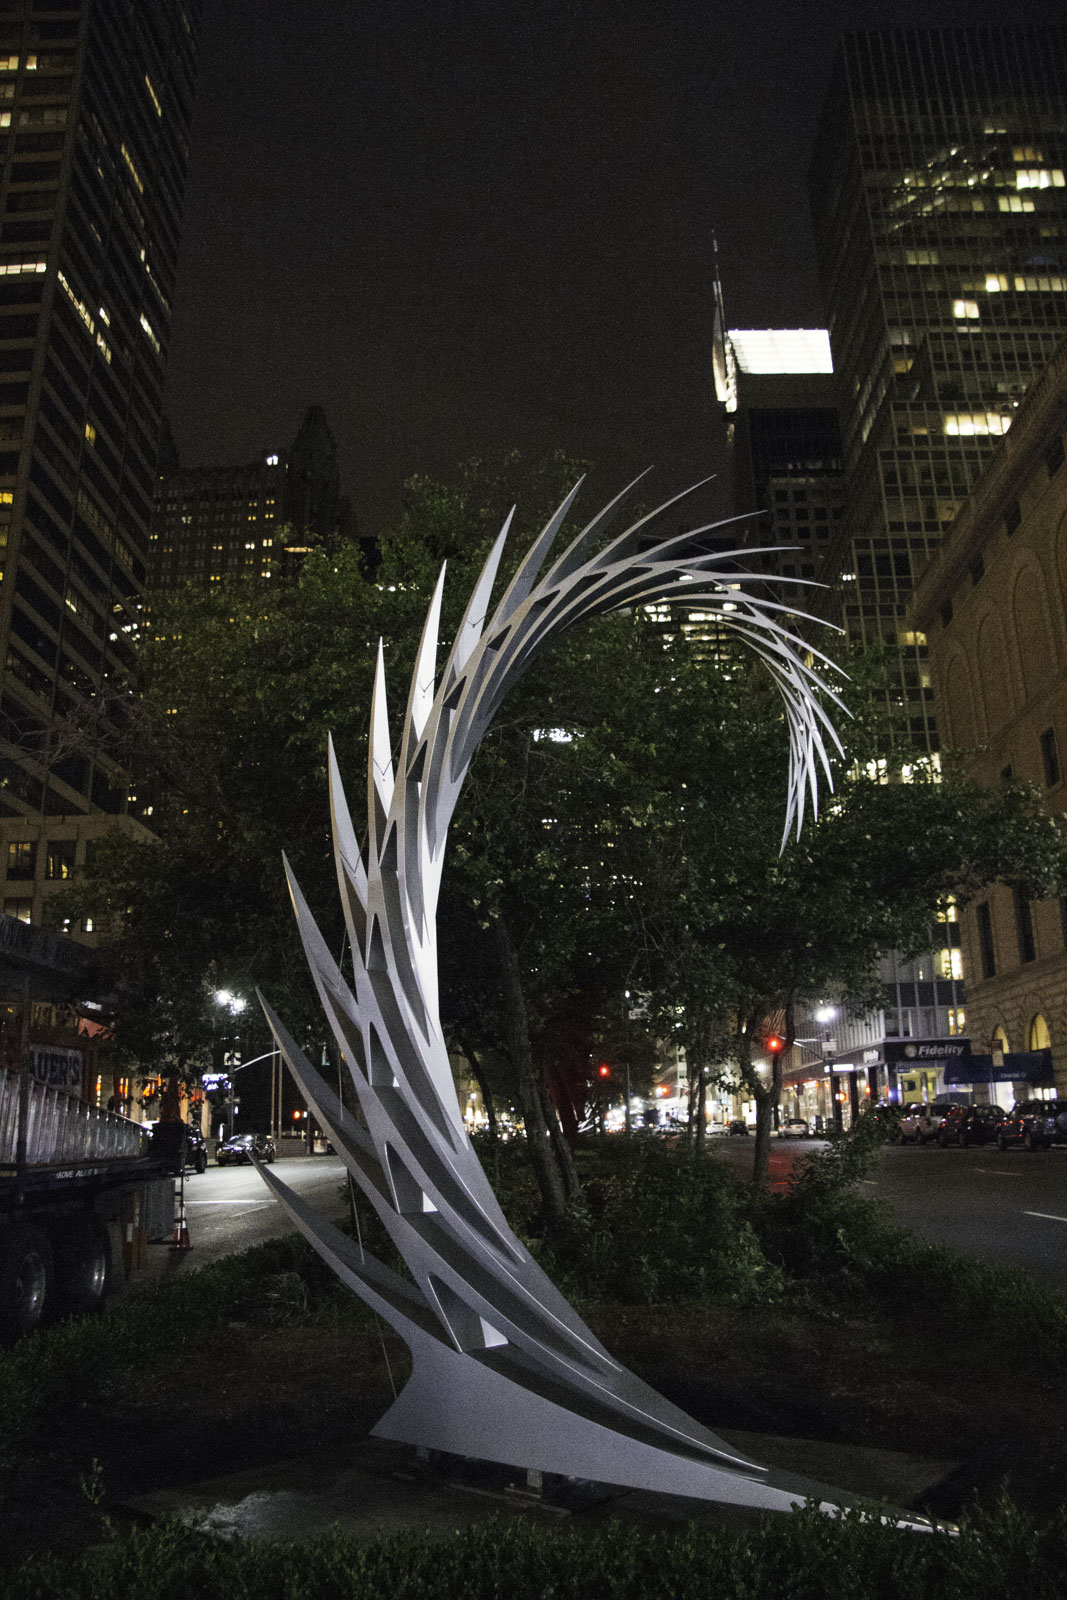 Santiago Calatrava's sculpture S3 installed on Park Avenue in New York city